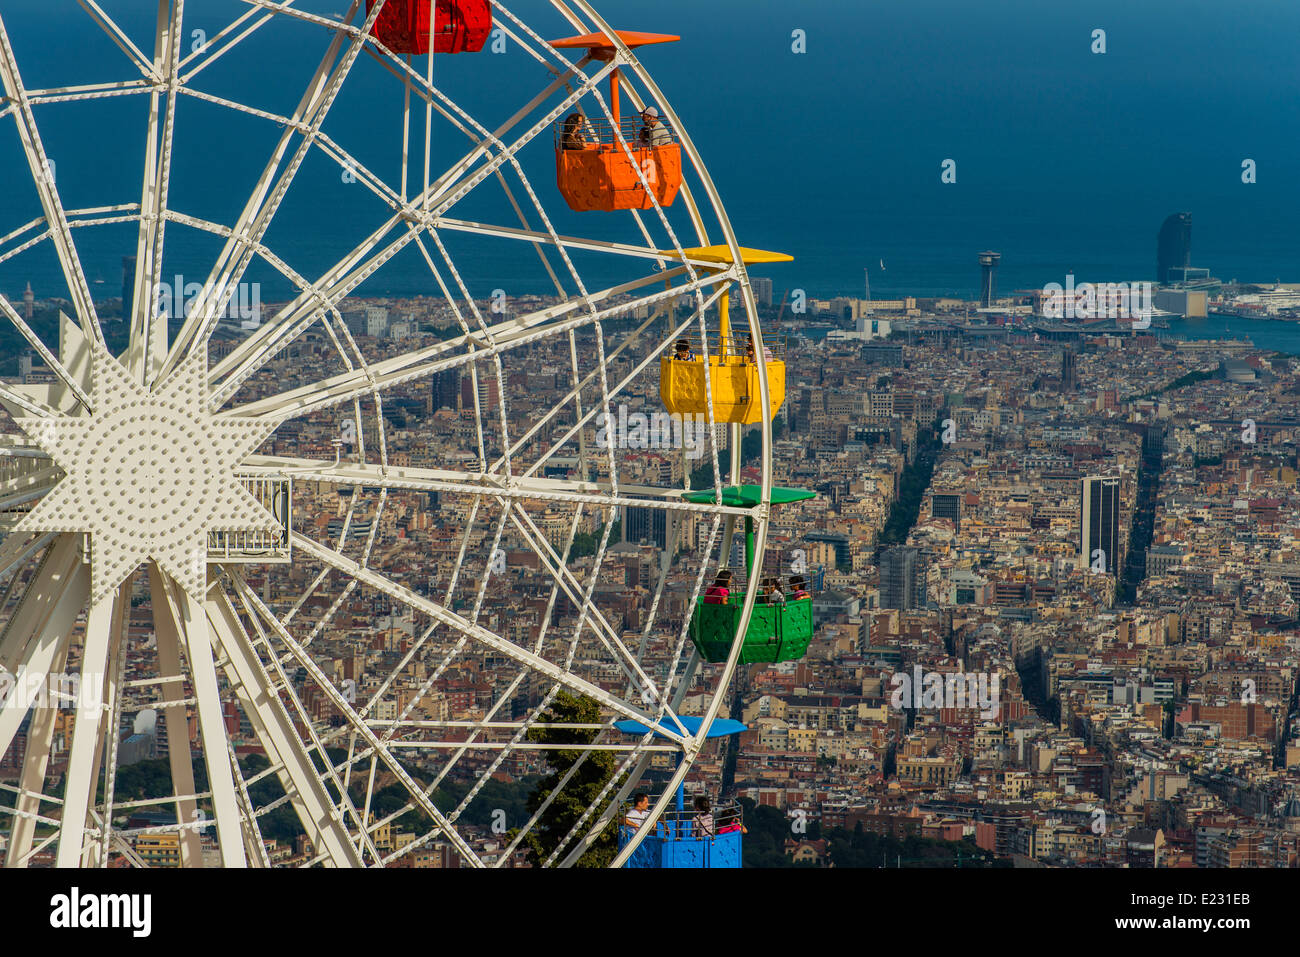 Ferry wheel at Tibidabo amusement park, Barcelona, Catalonia, Spain Stock Photo